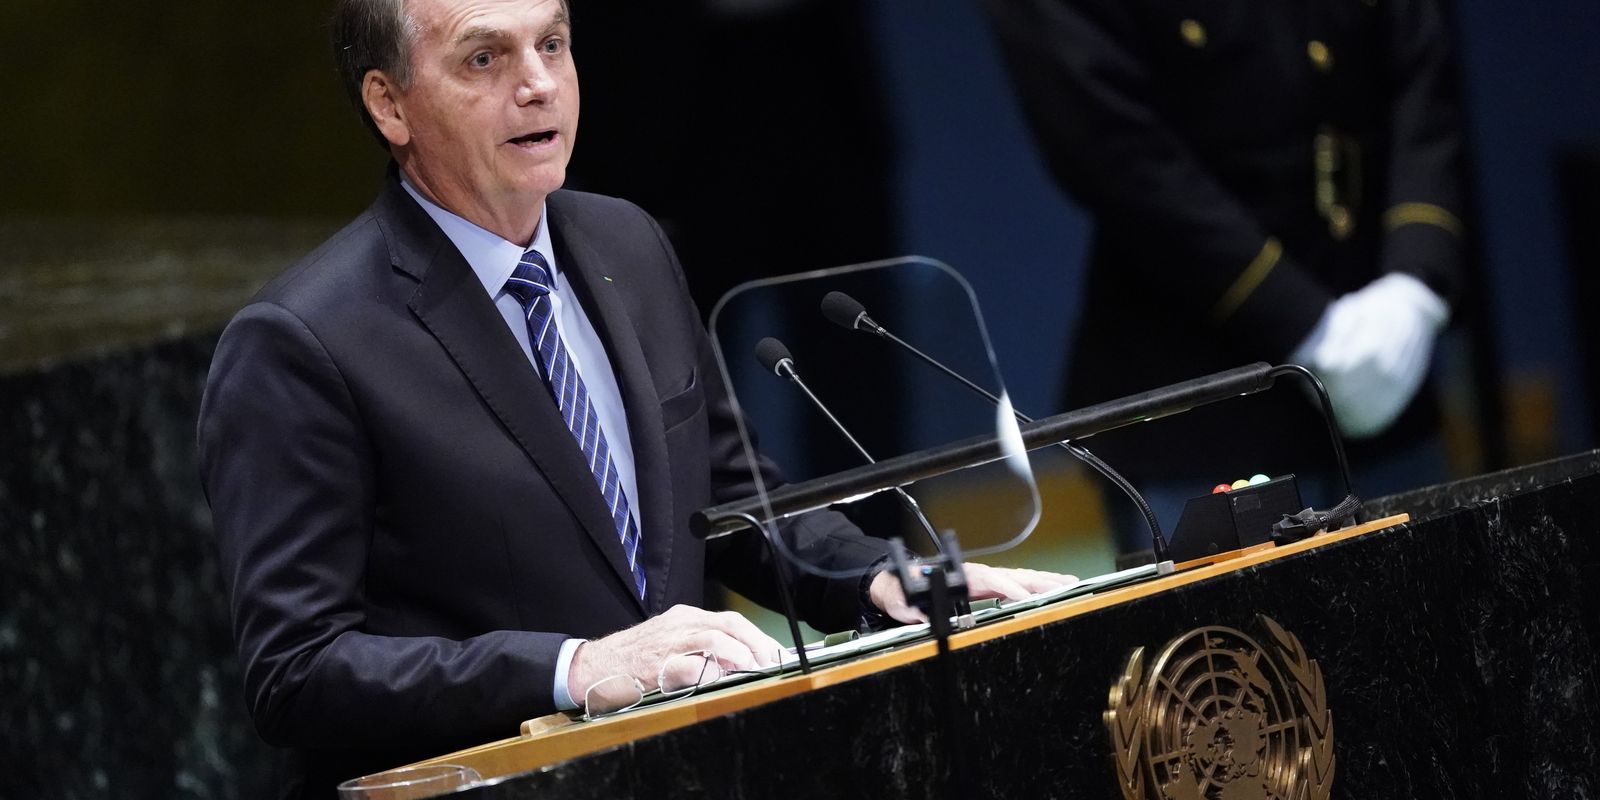 Bolsonaro highlights richness of Amazon forest in UN address